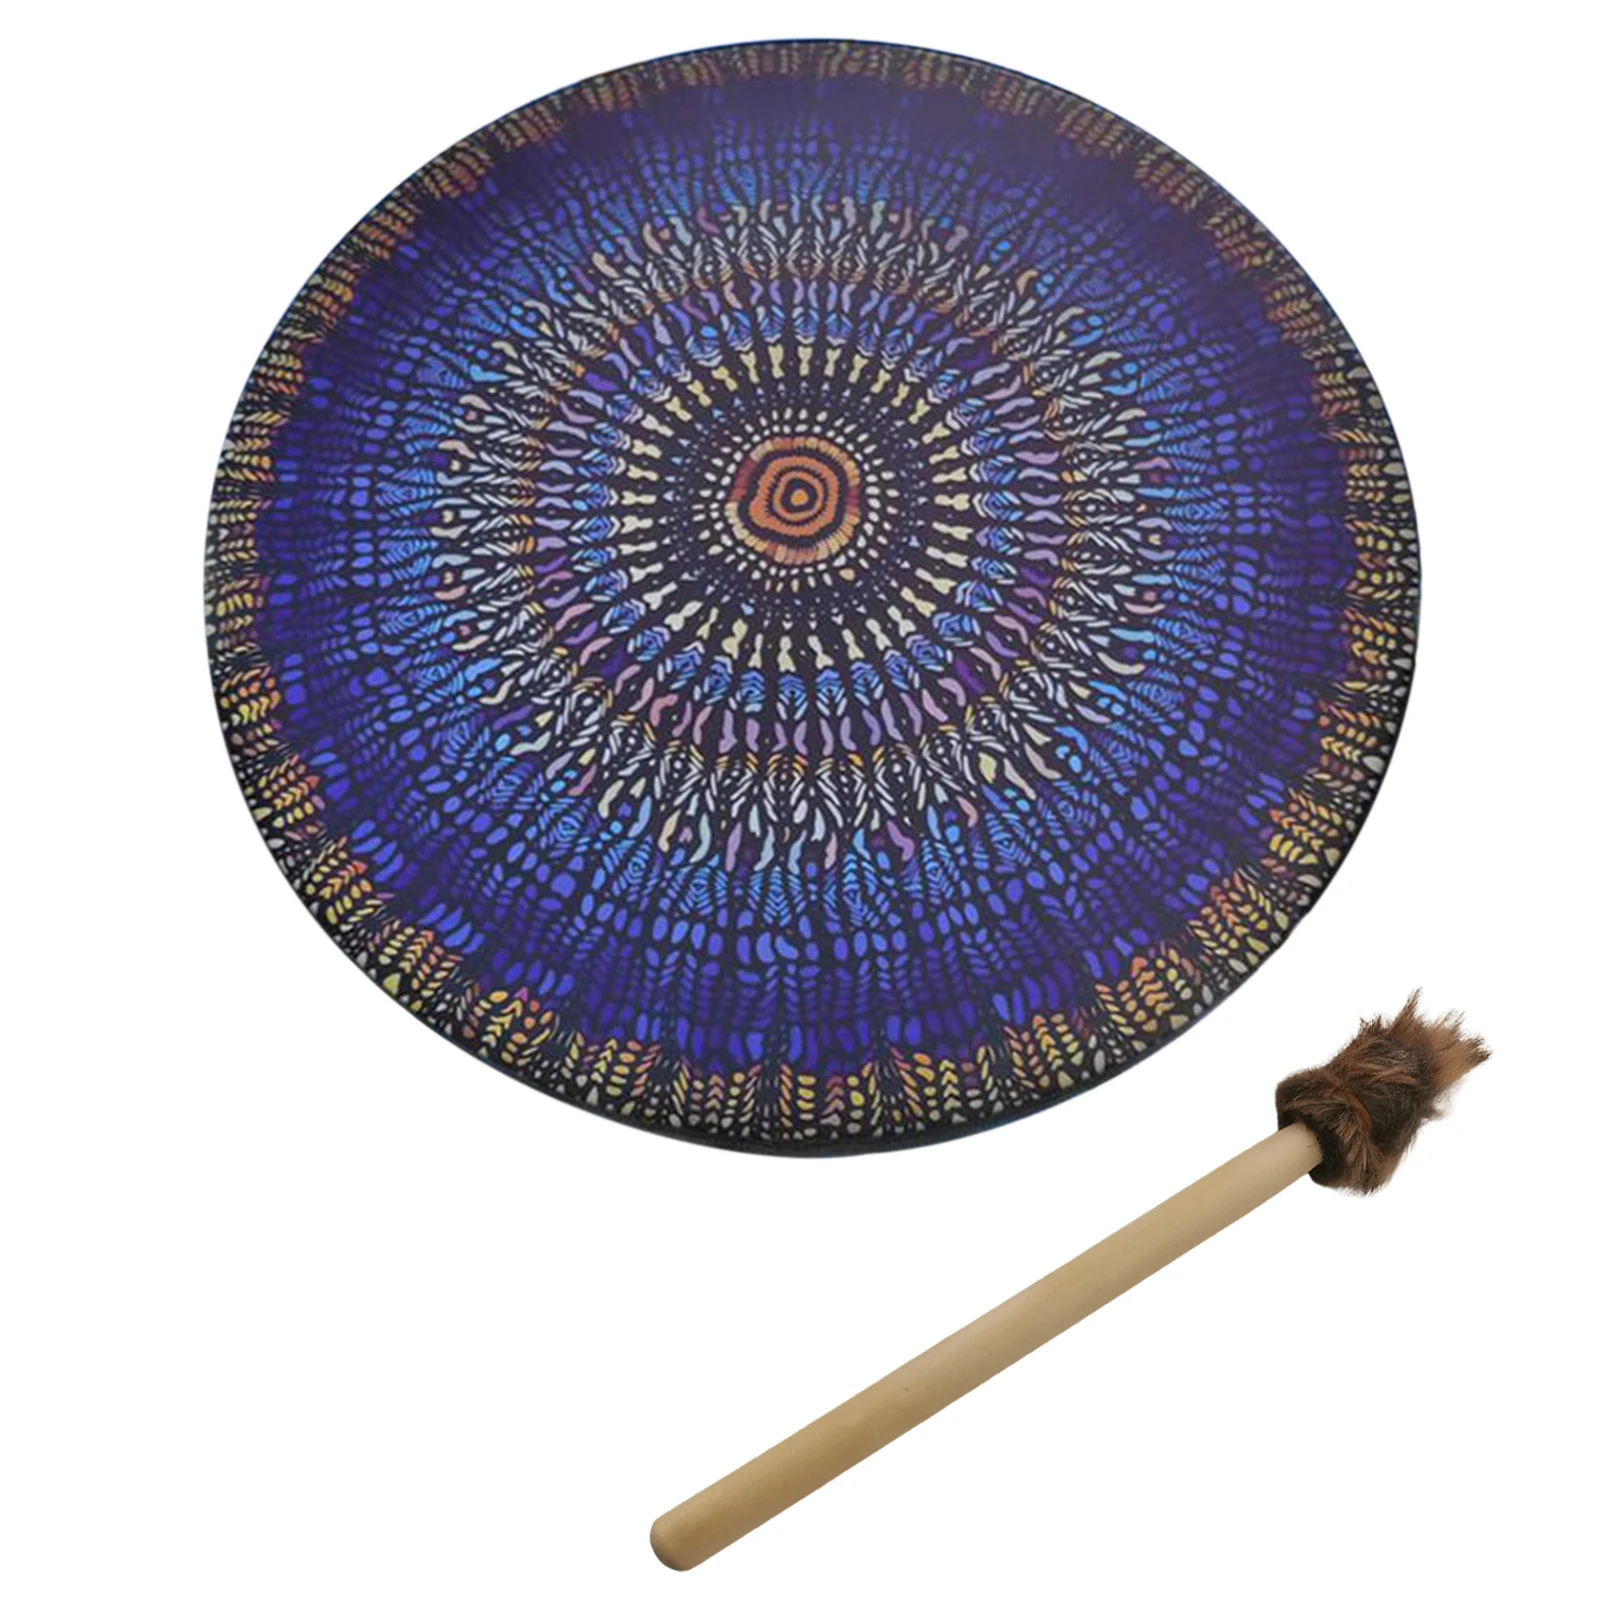 Shaman Drum Tree Of Life Ornament Wooden Shamanic Drum Percussion Frame Drum Music Spiritual Shaman Drum With Drum Stick